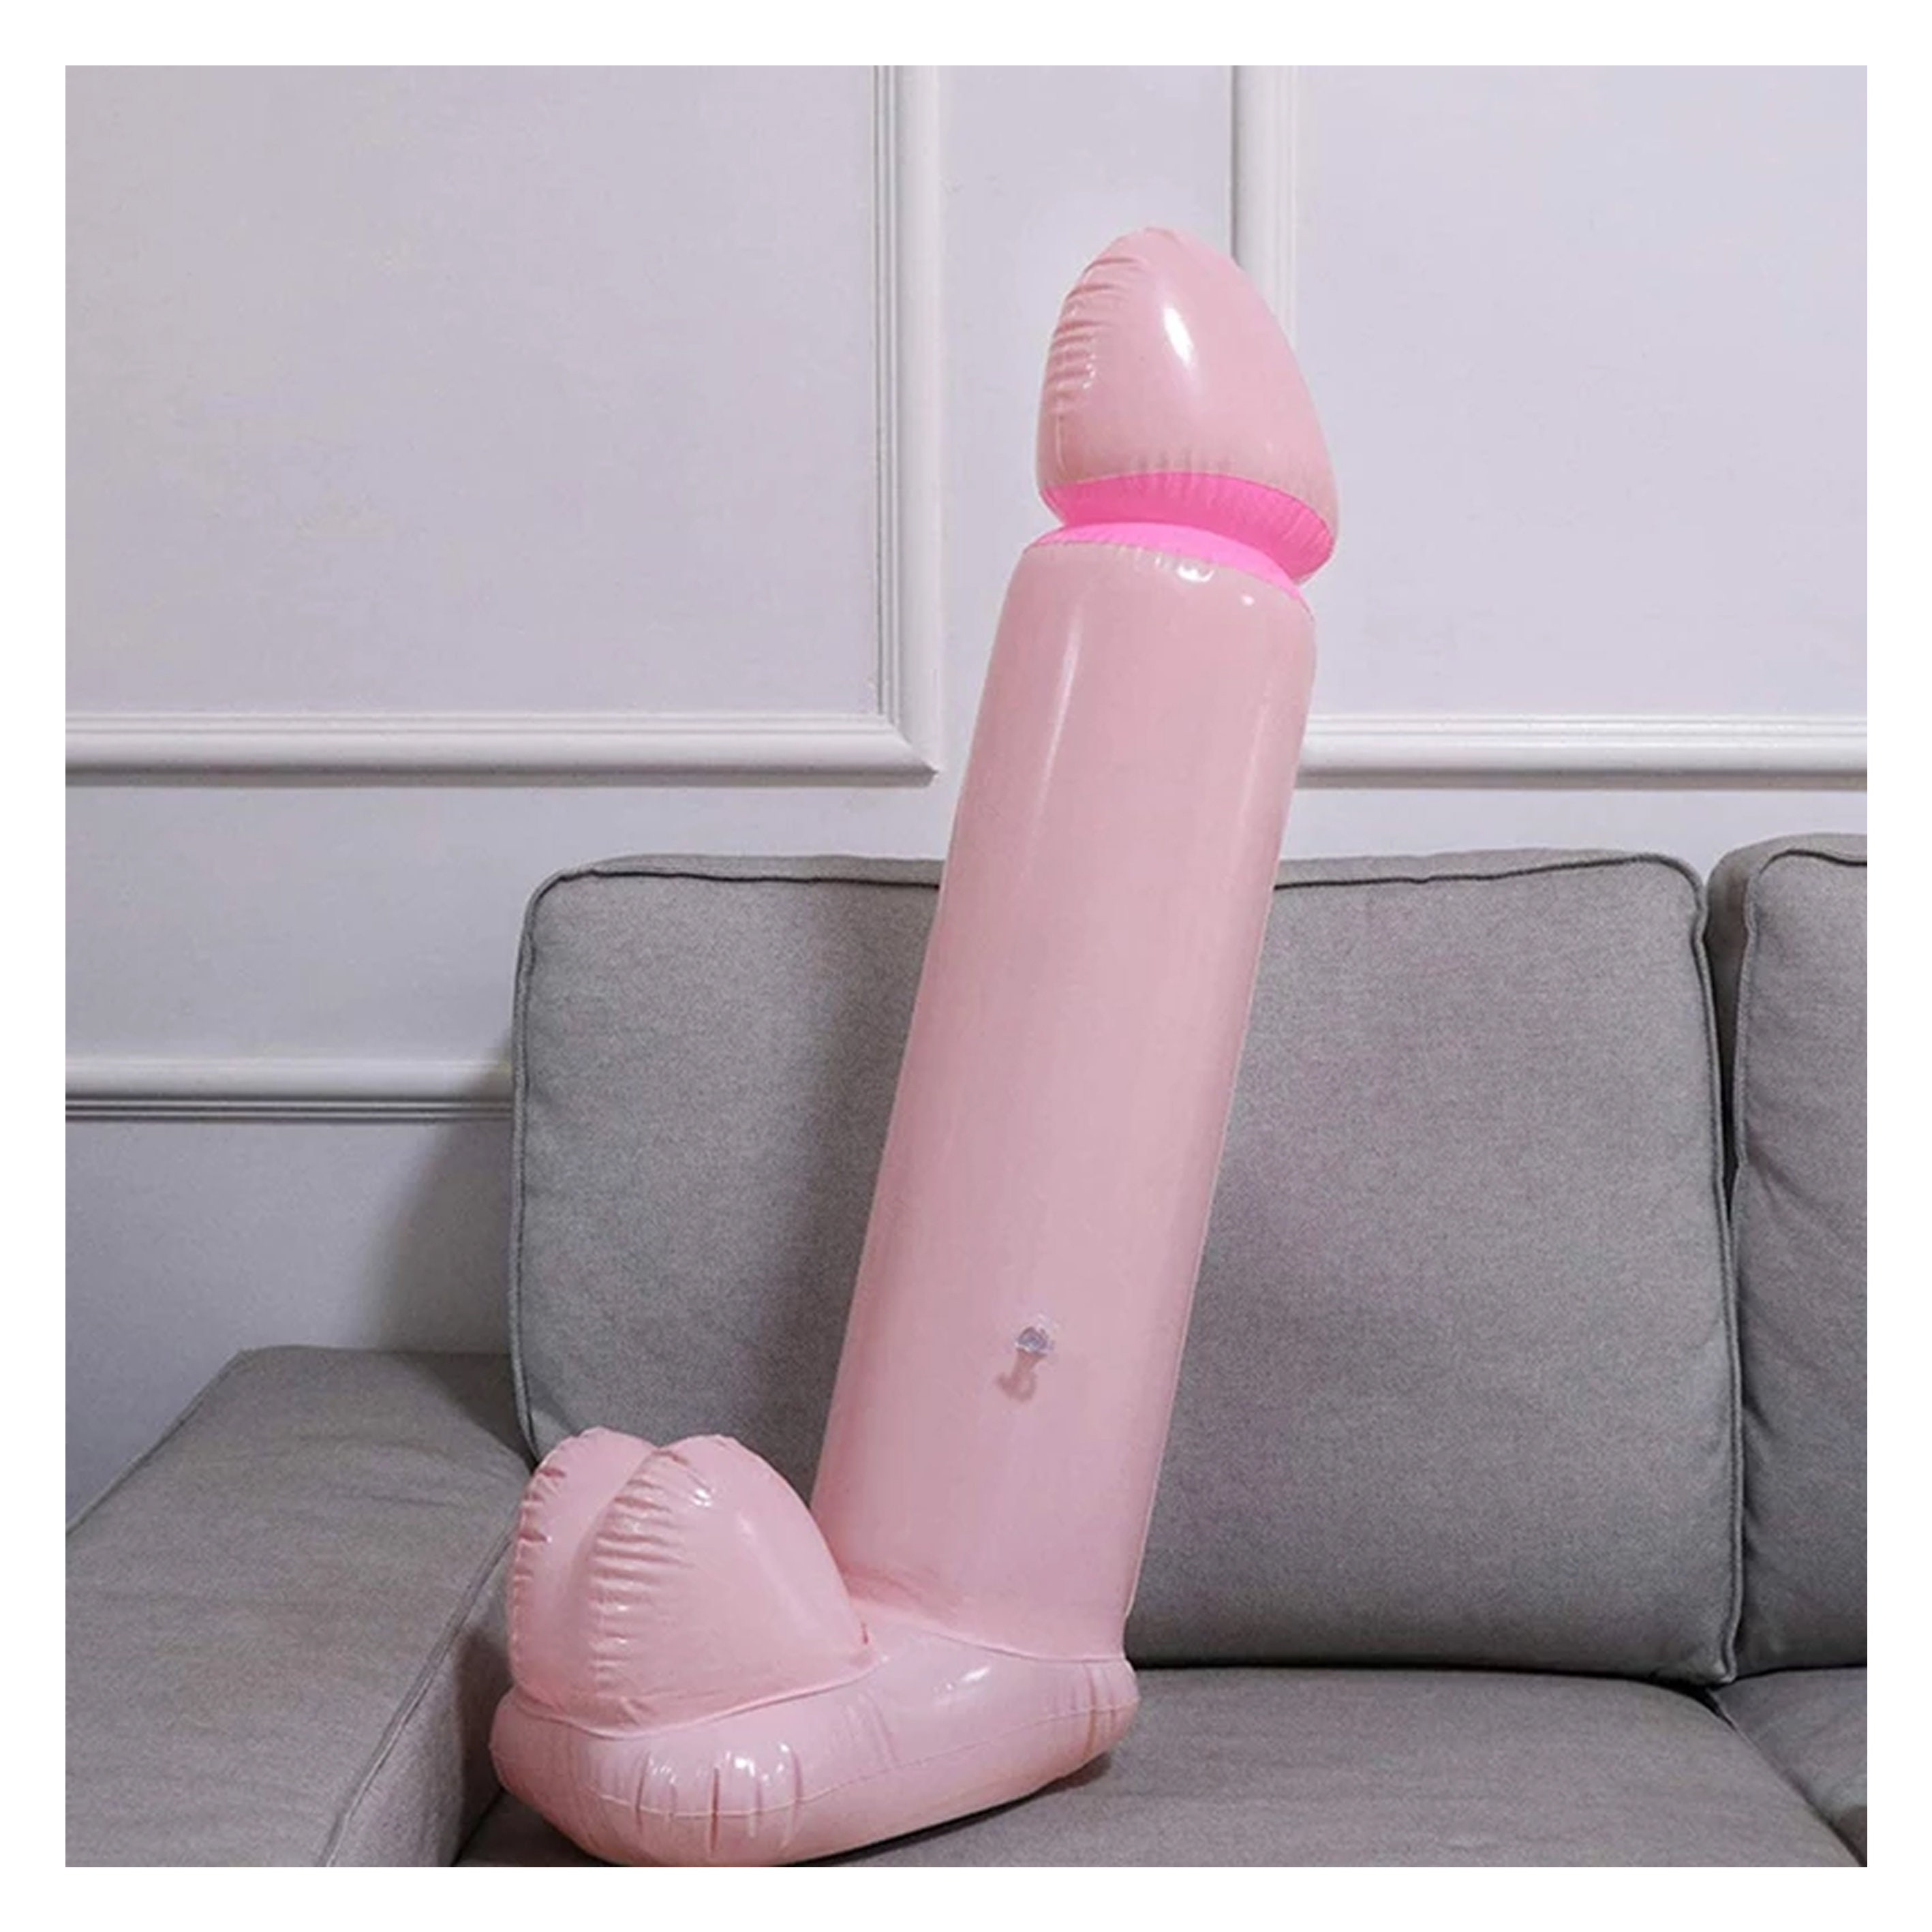 Globo inflable con forma de pene para adultos, juguete de broma de lujo con  cara de